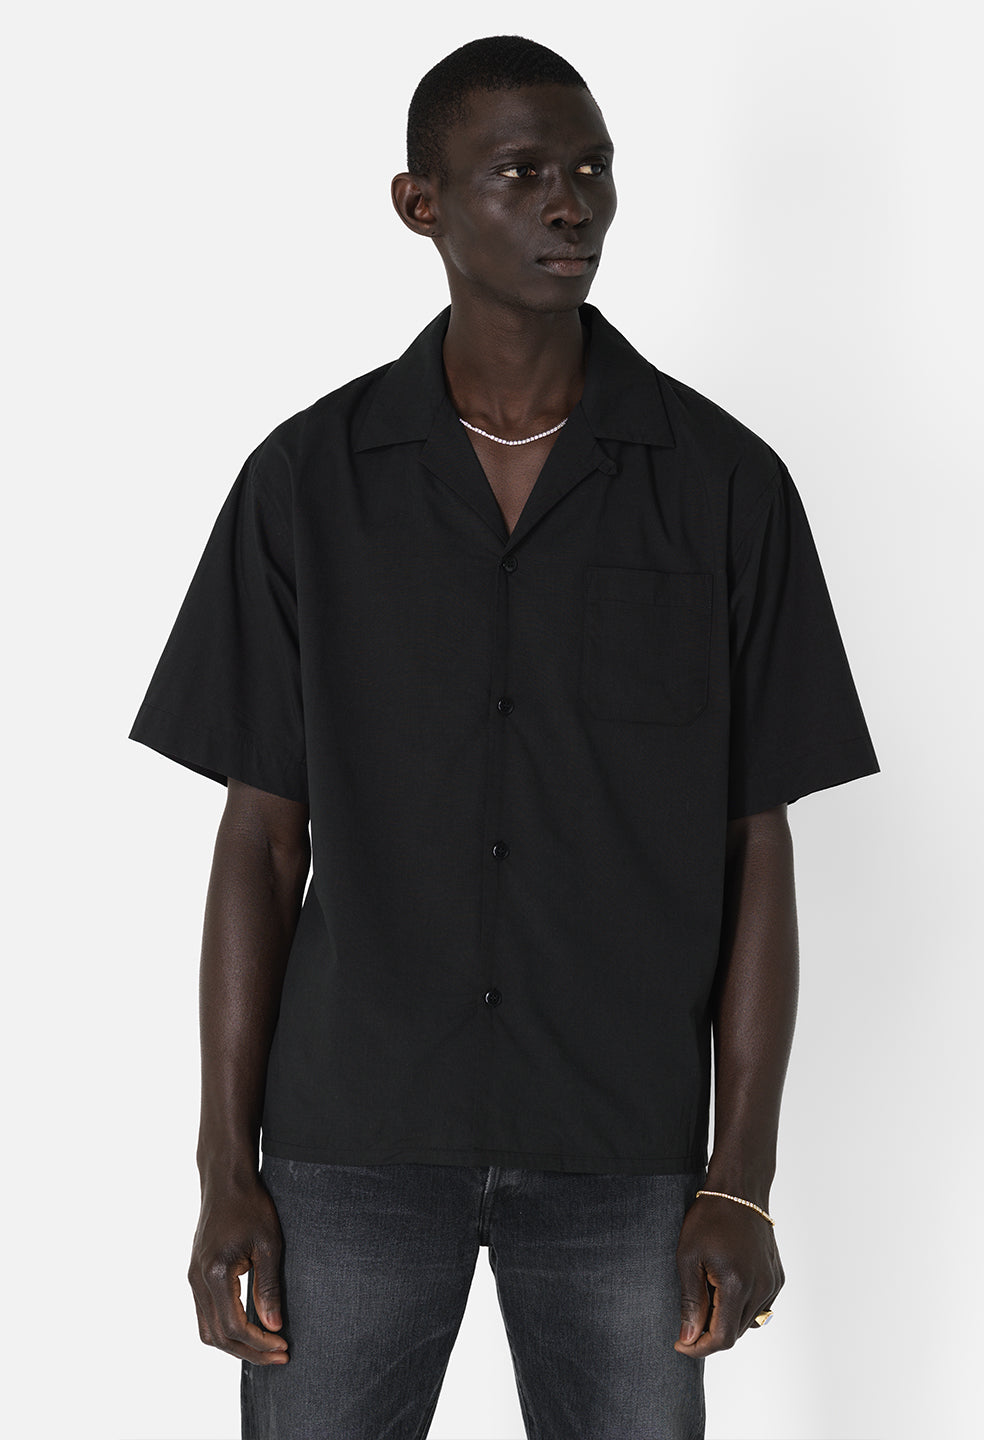 Black Shirts For Men, Black Dress & Button Down Shirts